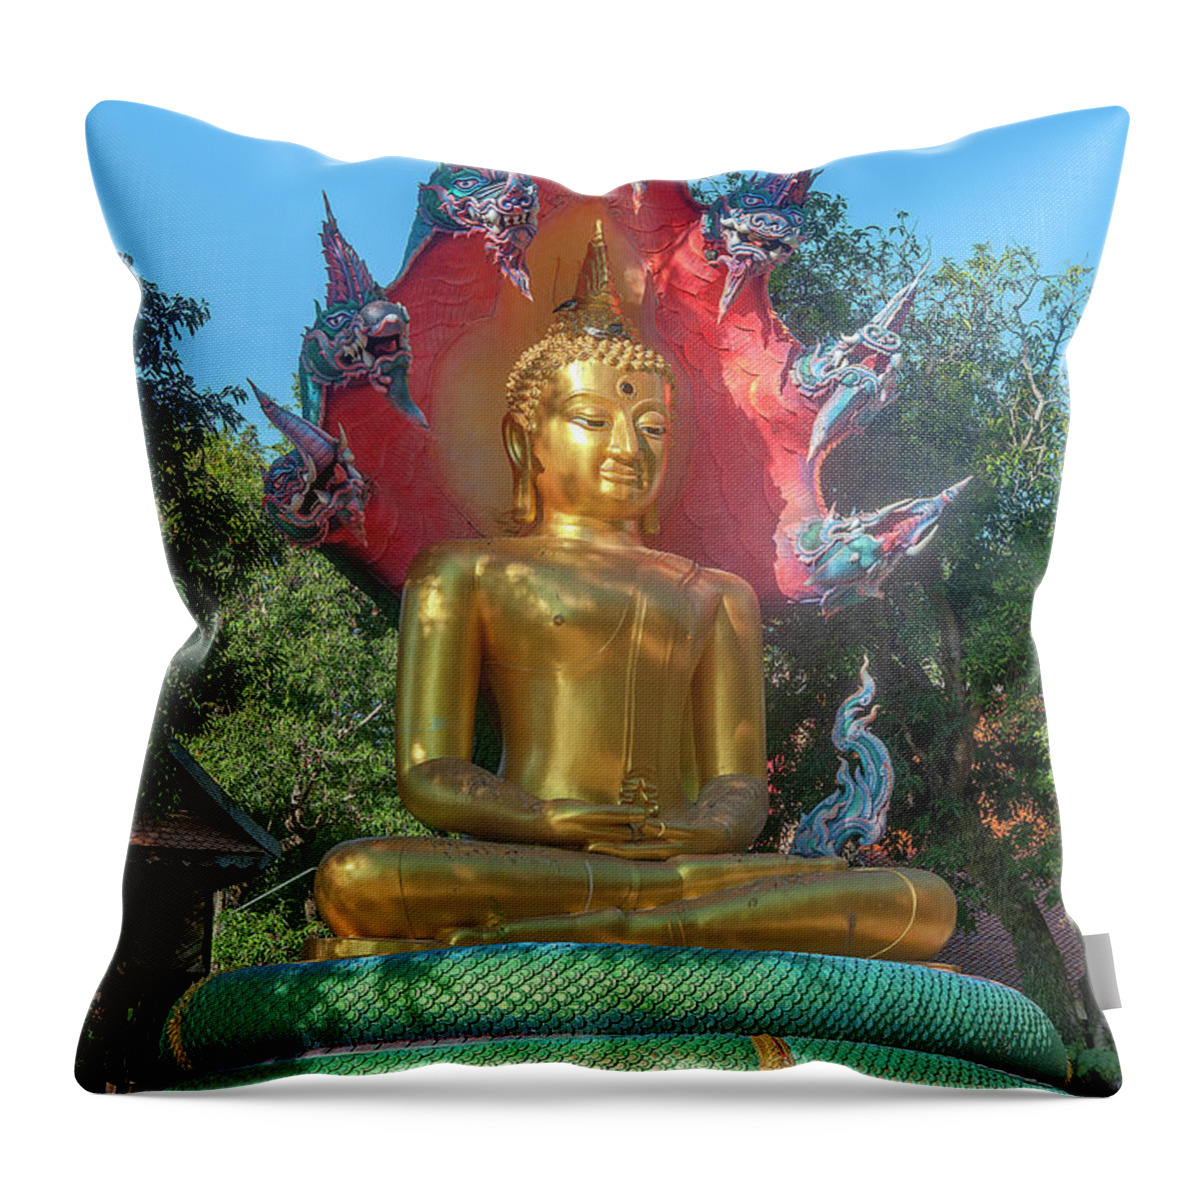 Scenic Throw Pillow featuring the photograph Wat Burapa Buddha Image on Naga Throne DTHU1397 by Gerry Gantt